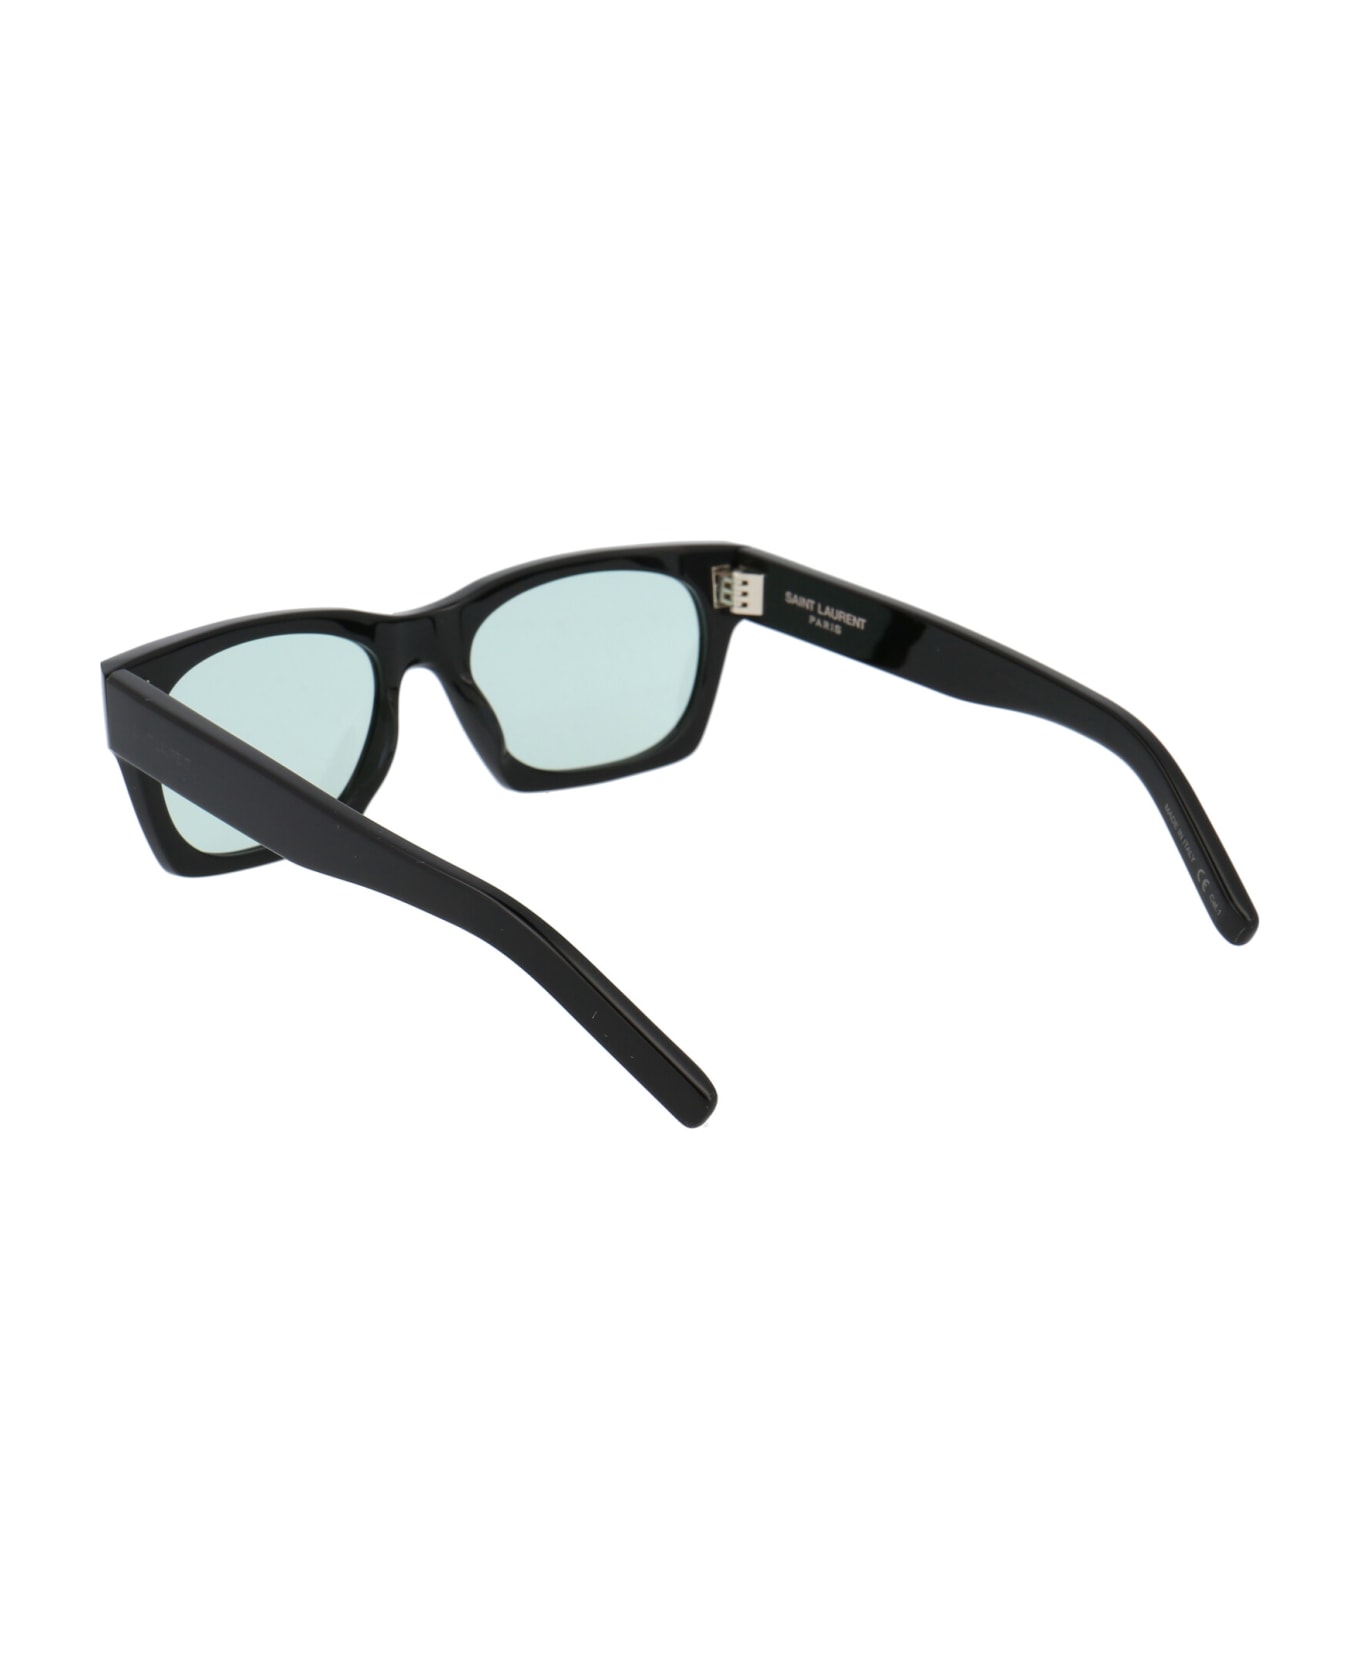 Saint Laurent Eyewear Sl 402 52RS Sunglasses - 006 BLACK BLACK GREEN